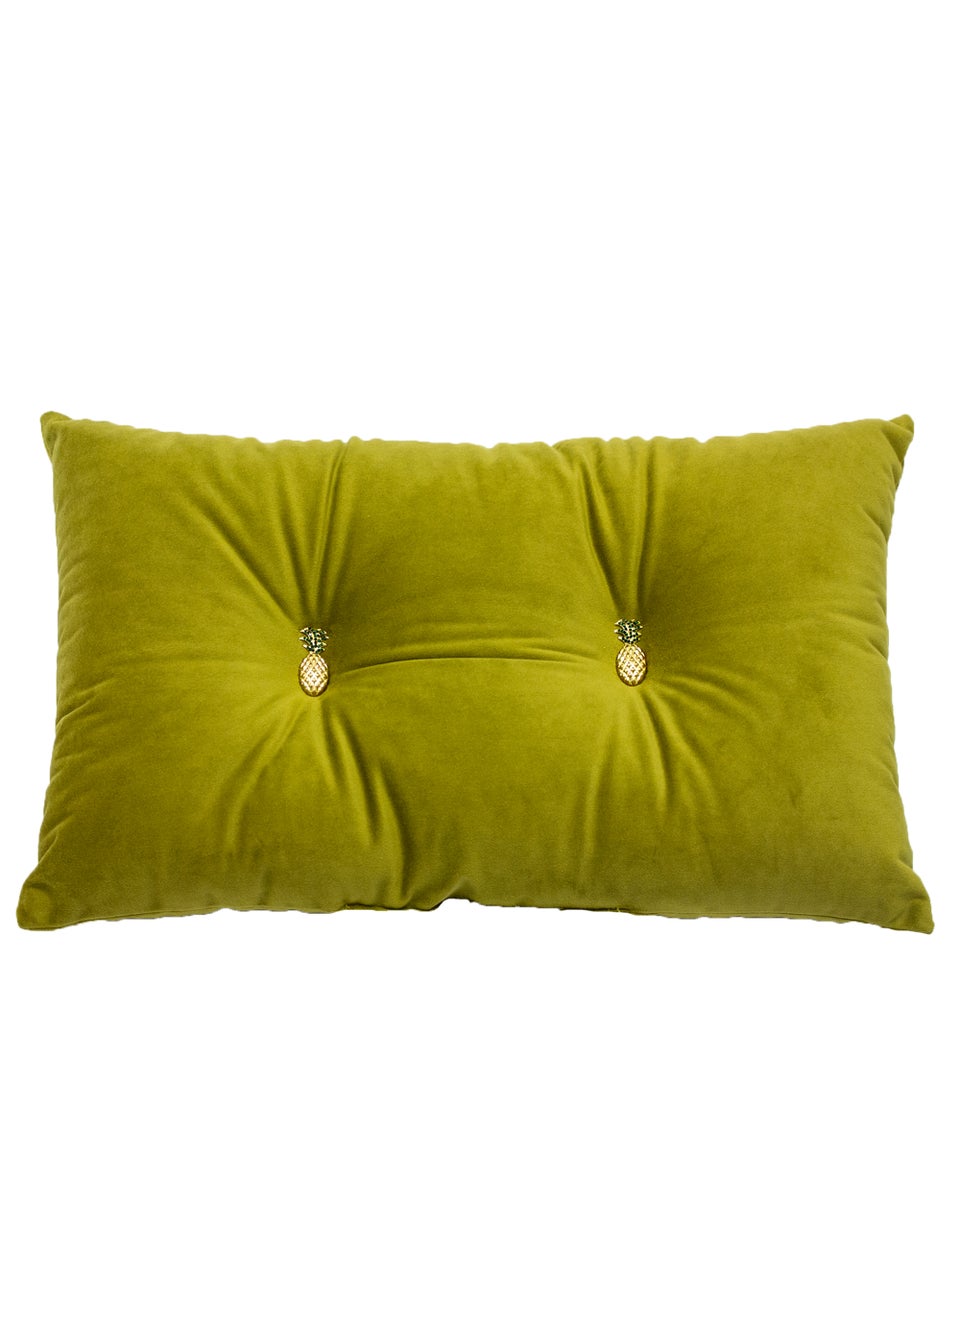 Paoletti Pineapple Button Velvet Cushion (30cm x 50cm x 8cm)